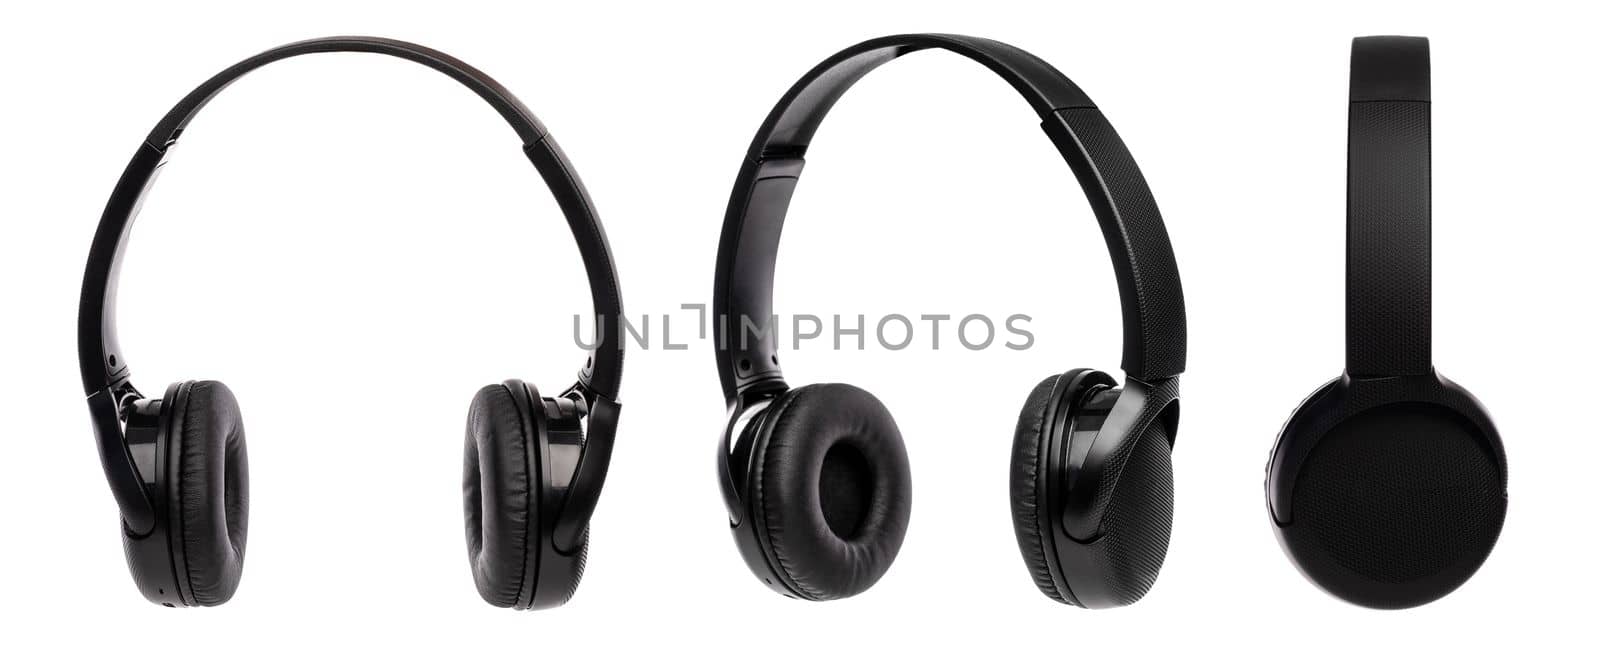 Set of Black wireless headphones isolated on white background